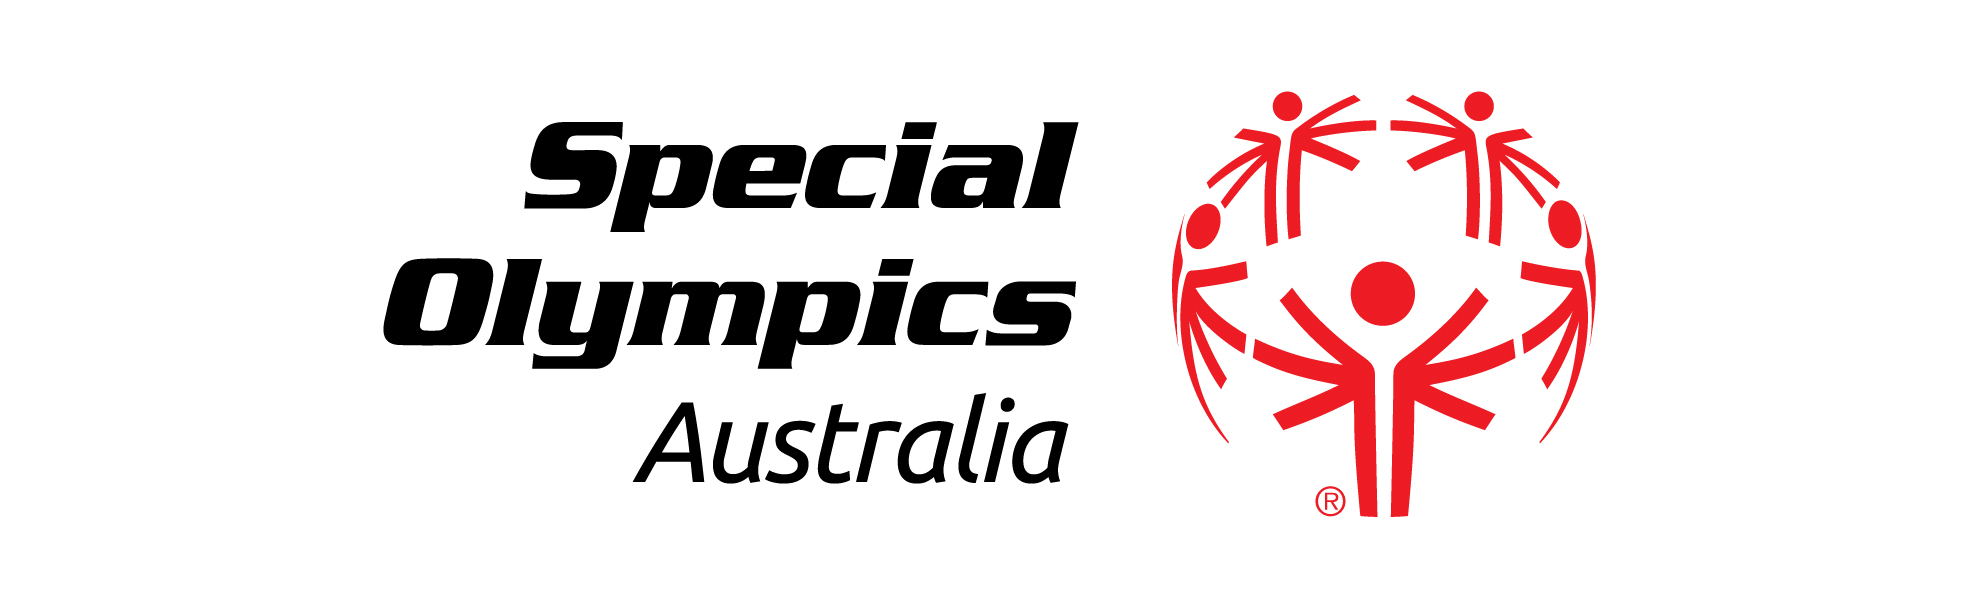 Special Olympics Australia Board of Directors at Special Olympics